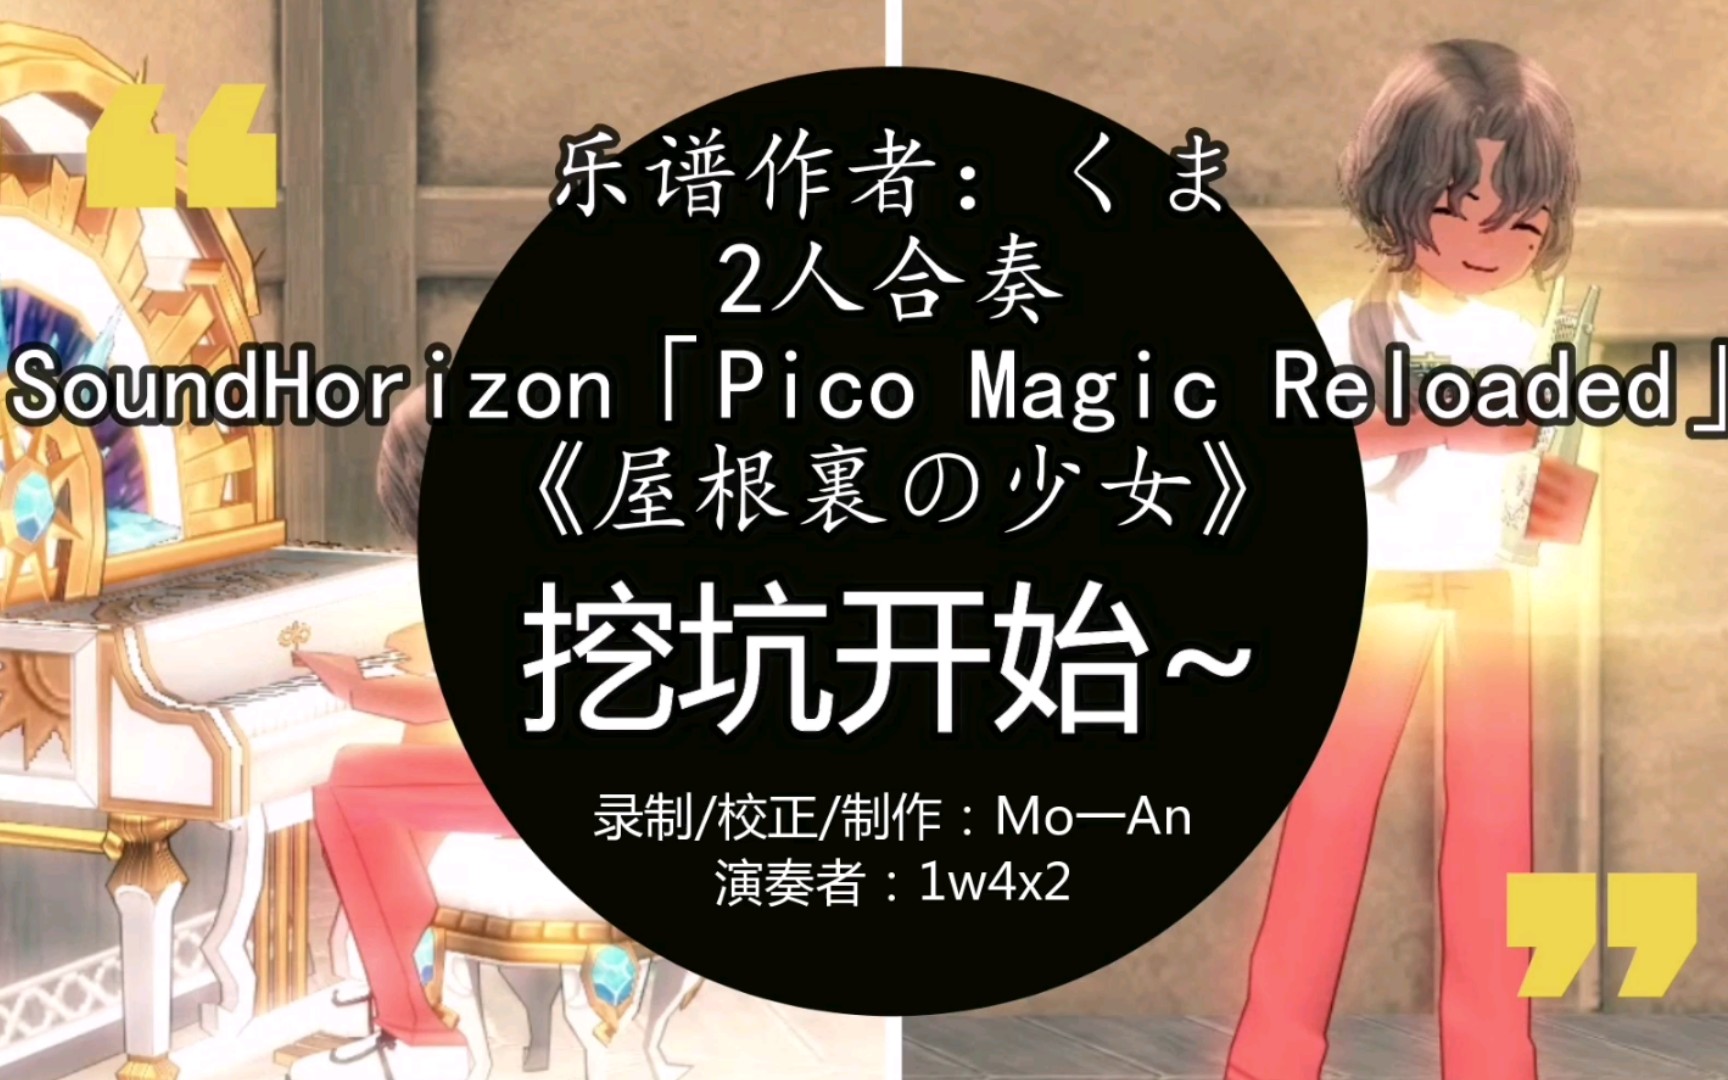 Mo一An】《洛奇/演奏视频》SoundHorizon「Pico Magic Reloaded」屋根裏